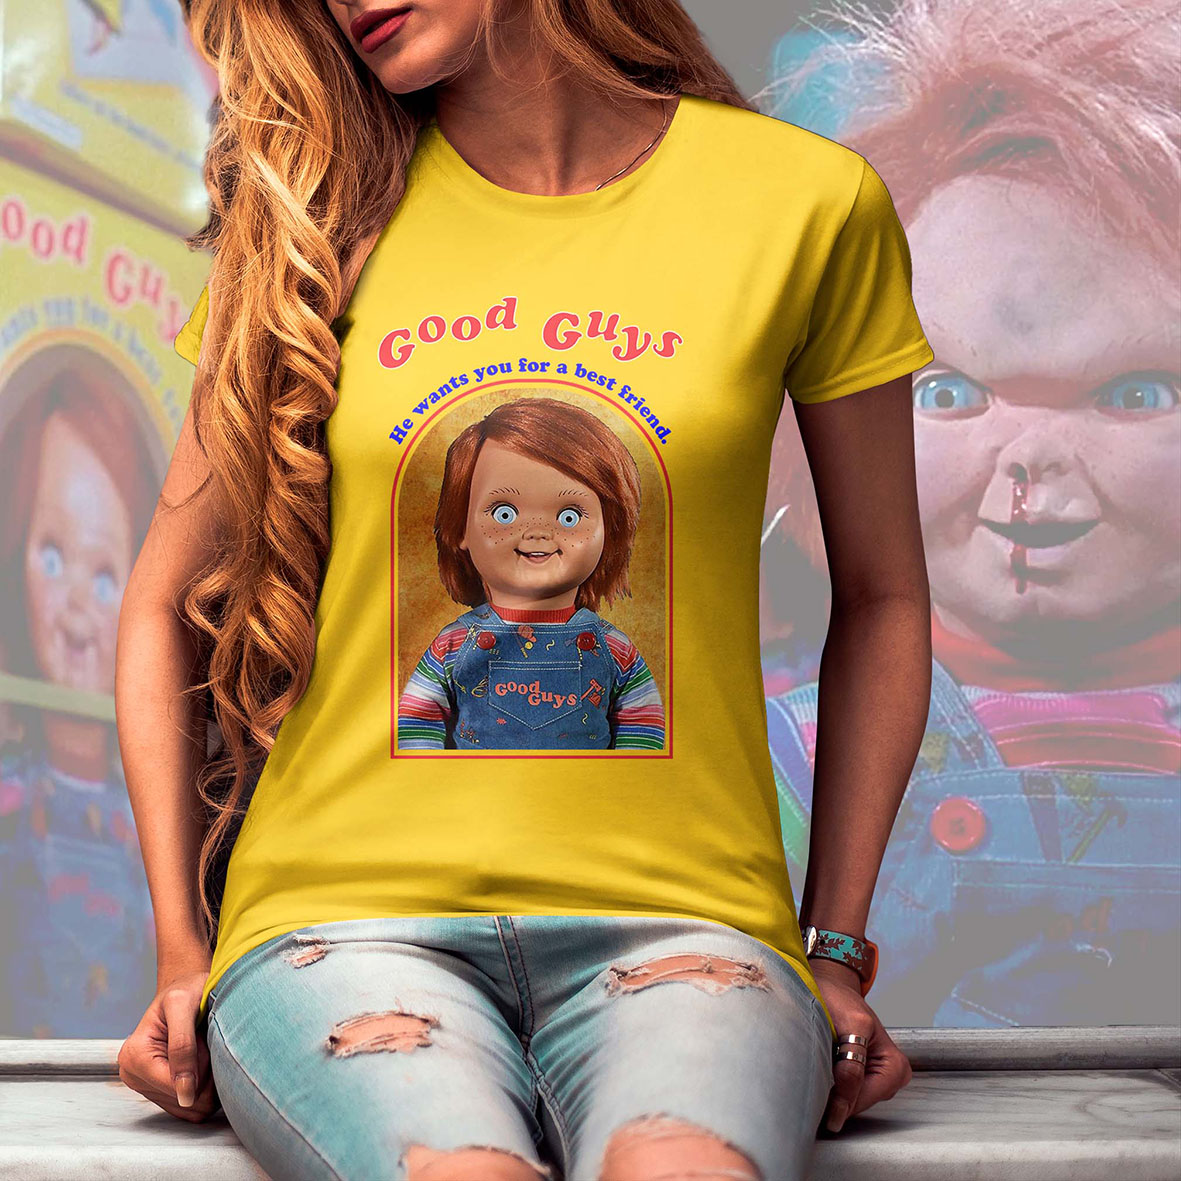 Camiseta Unissex Feminina Good Guys Chucky Brinquedo Assassino Boneco Child's Play (Amarela)  Camisa Geek - CD